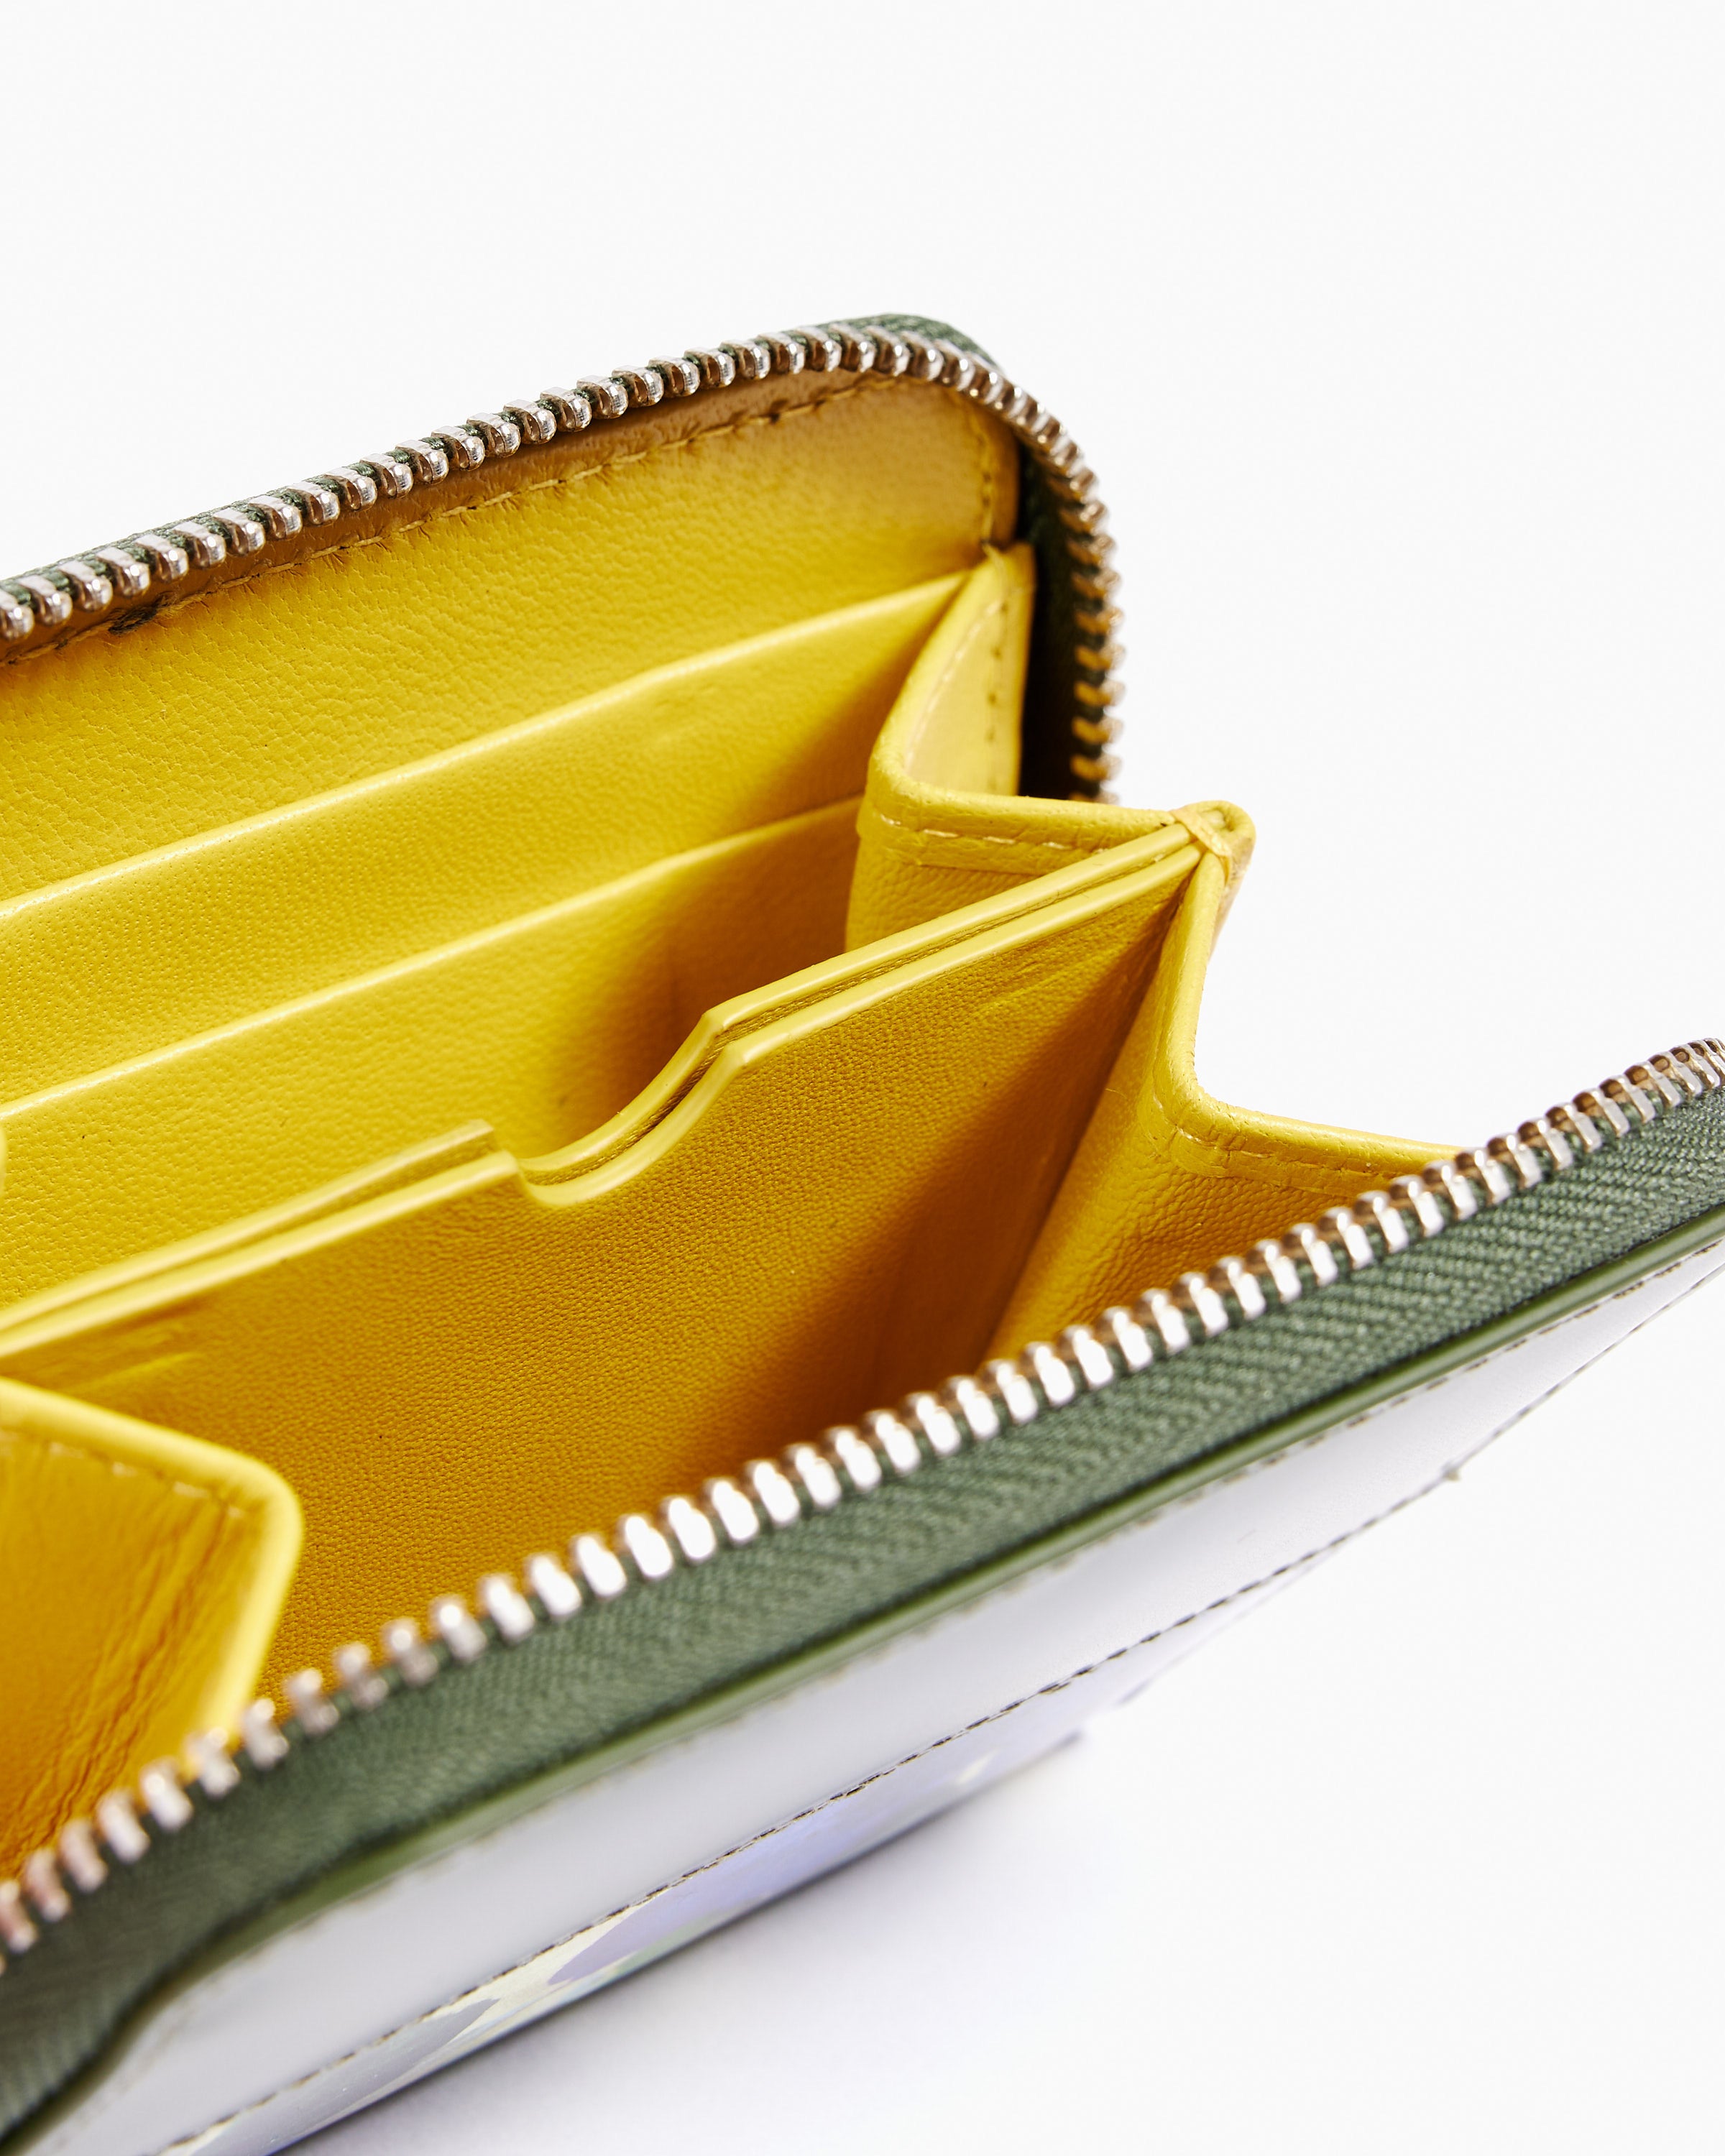 LOUIS QUATORZE Cheese 3-Gusset Card Wallet Pastel Green – NOTAG GLOBAL